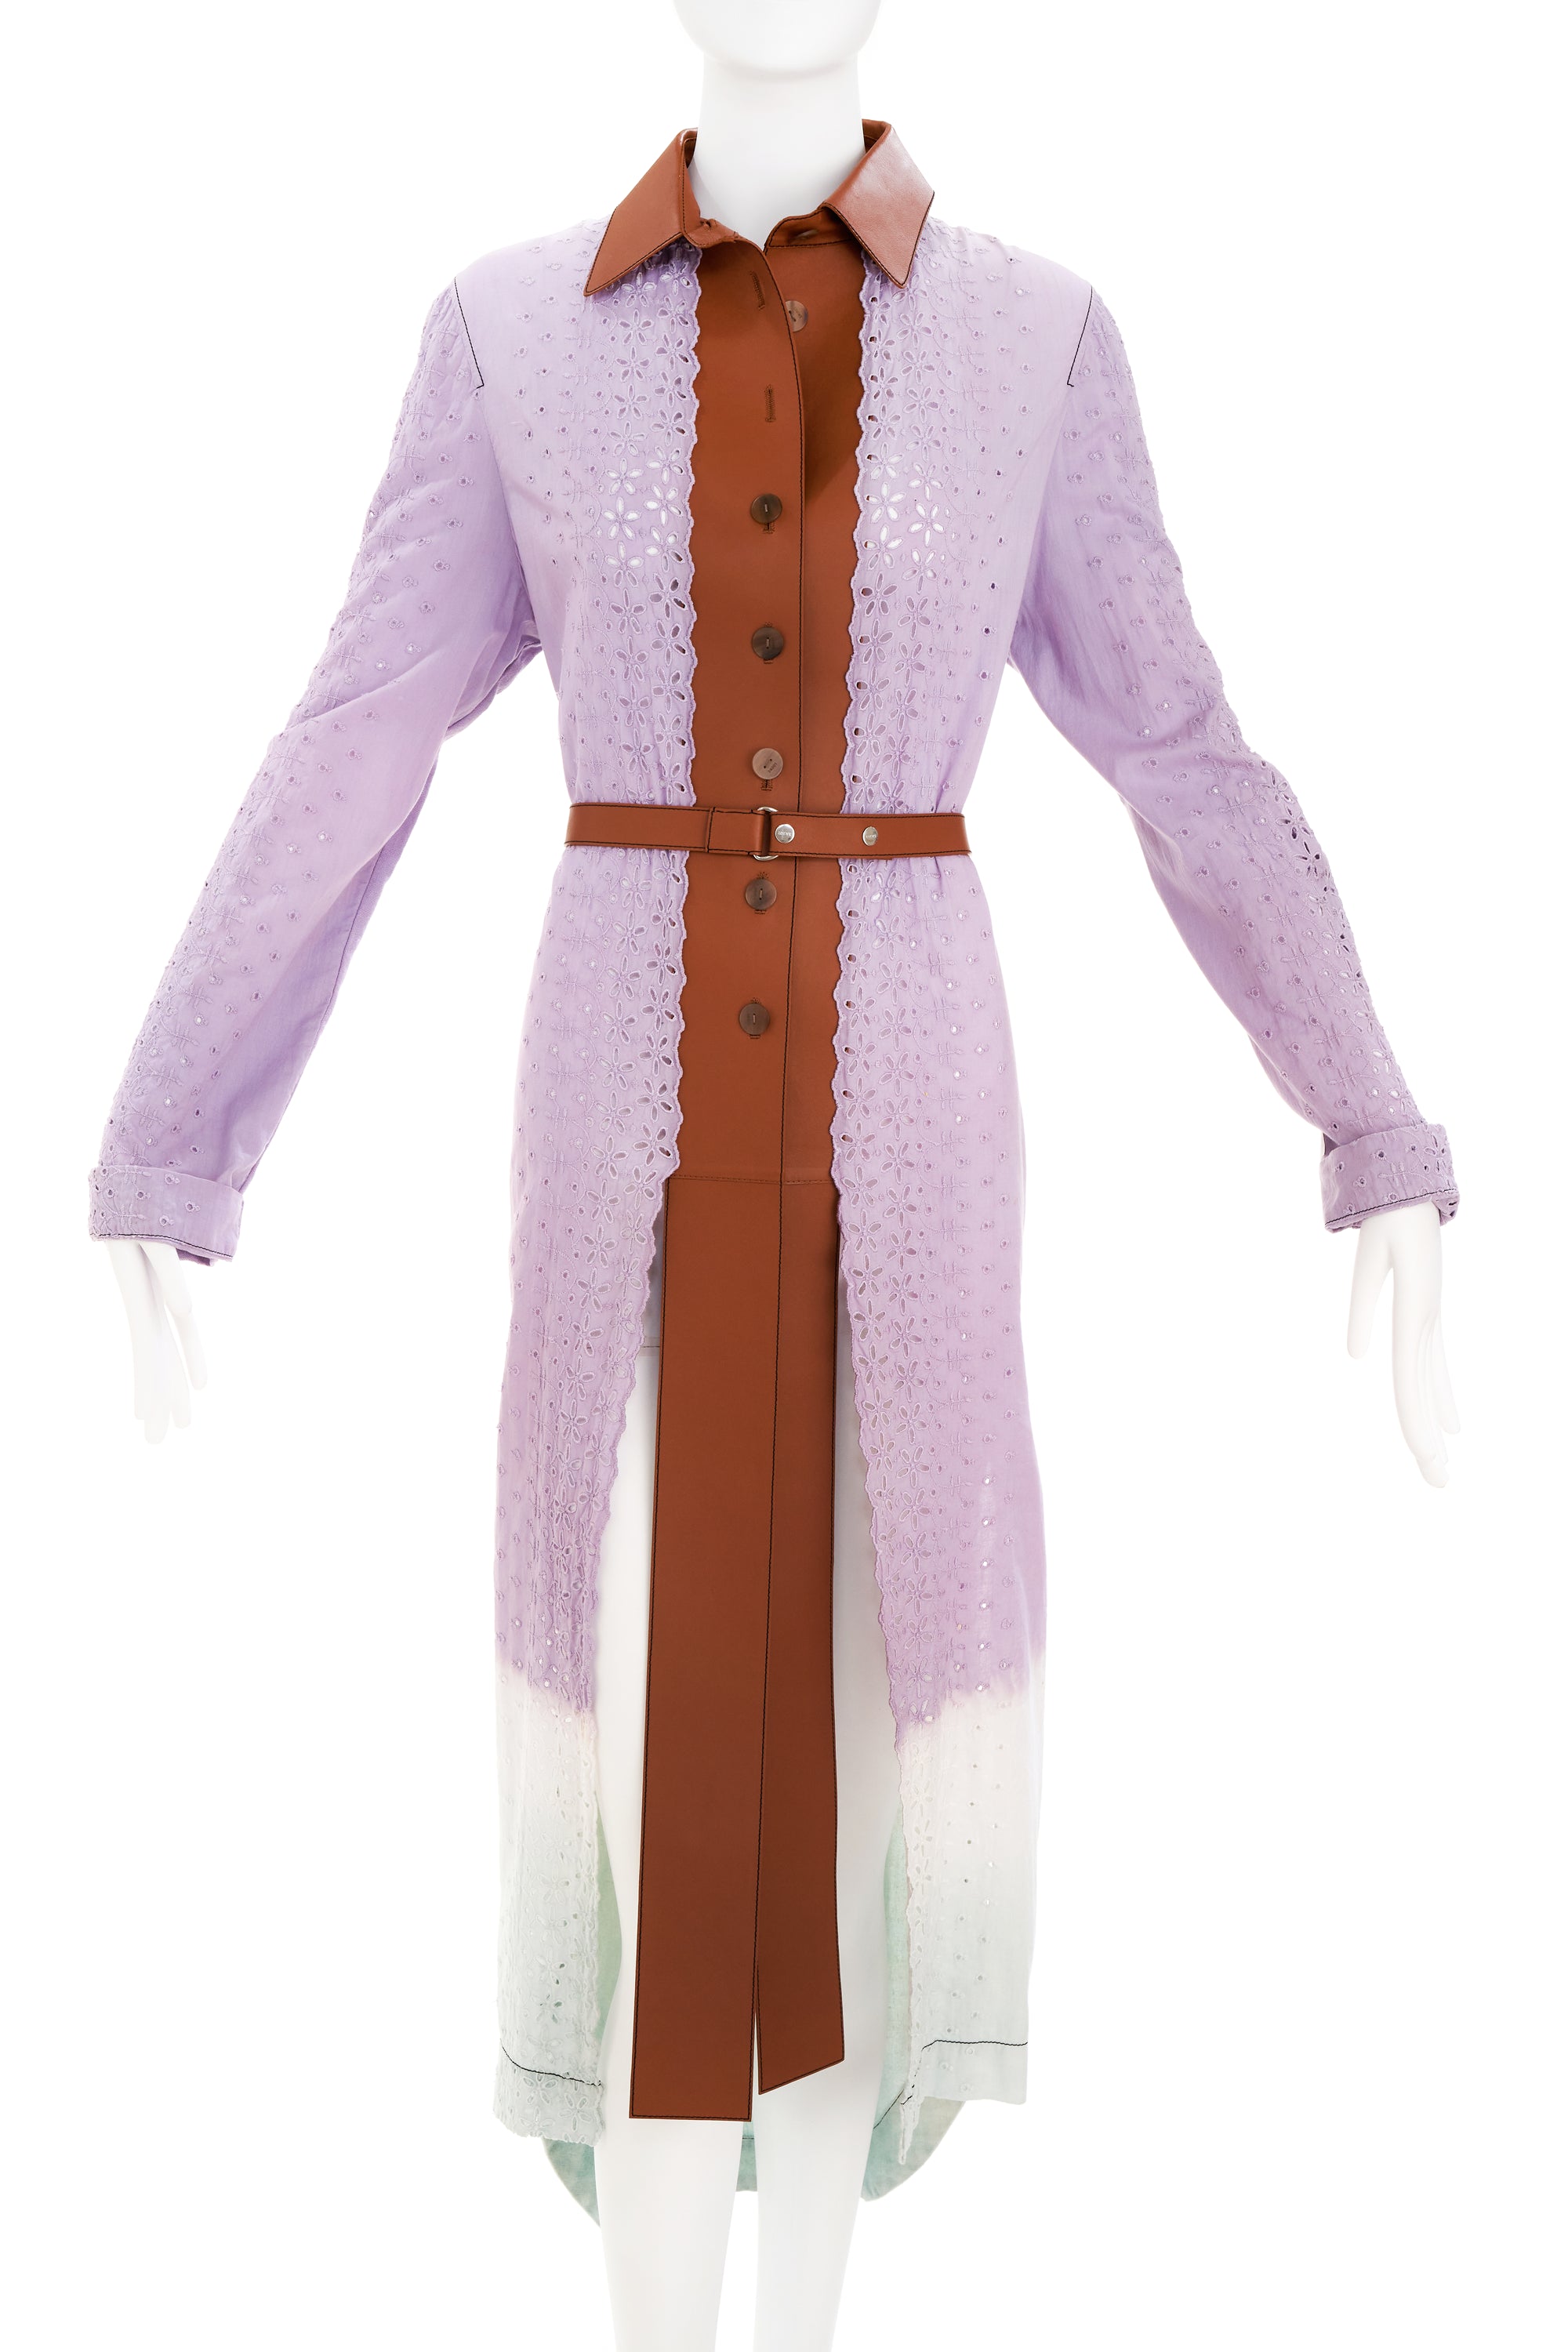 Loewe Long Lilac and Brown Trim Shirt Dress Size 44/8